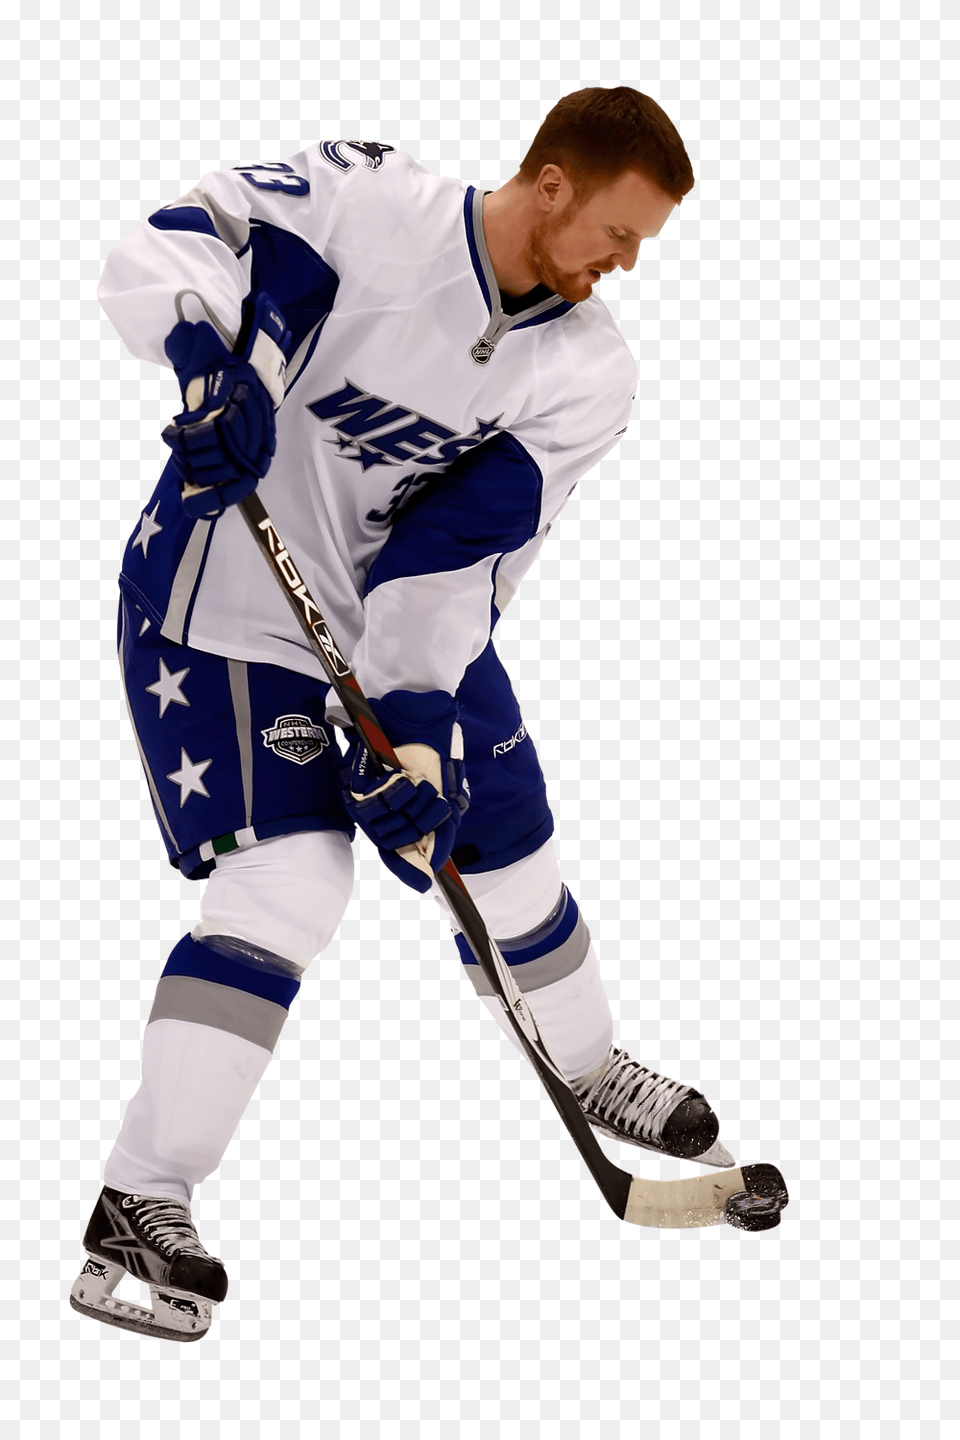 Hockey, Ice Hockey, Ice Hockey Stick, Rink, Skating Png Image